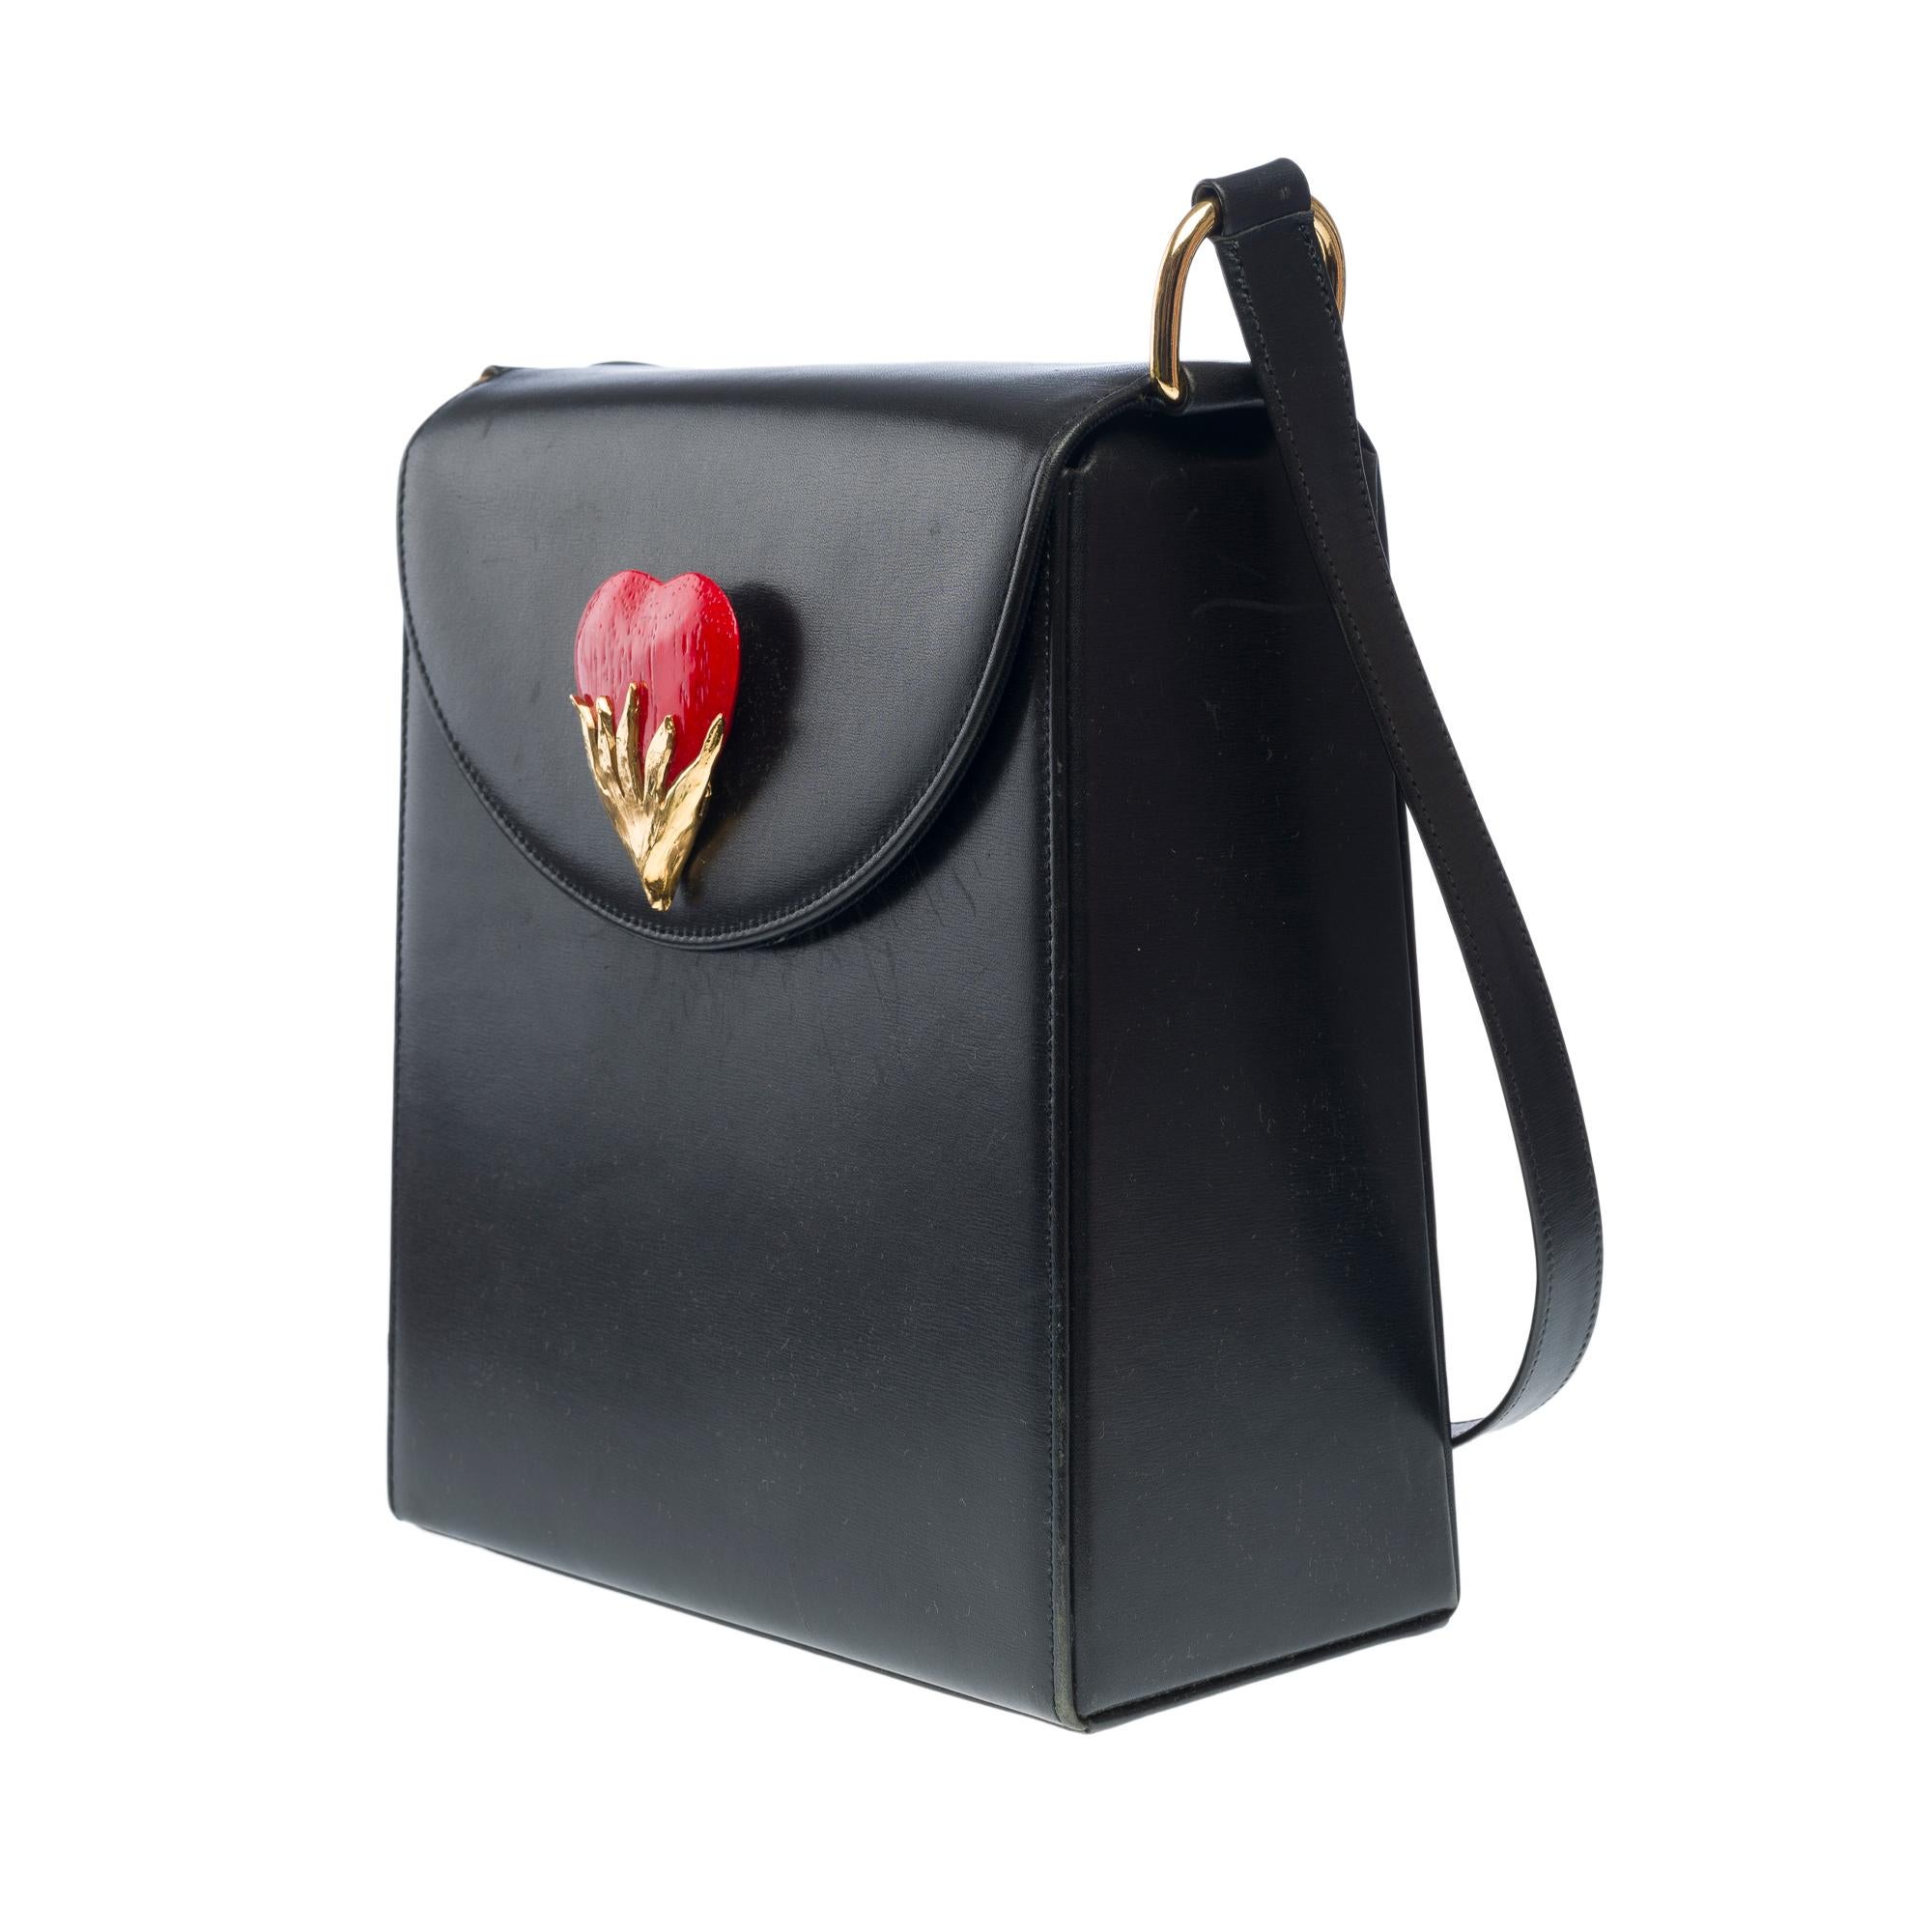 Lovely YSL vintage Messenger bag in black box calf leather, GHW For Sale 1